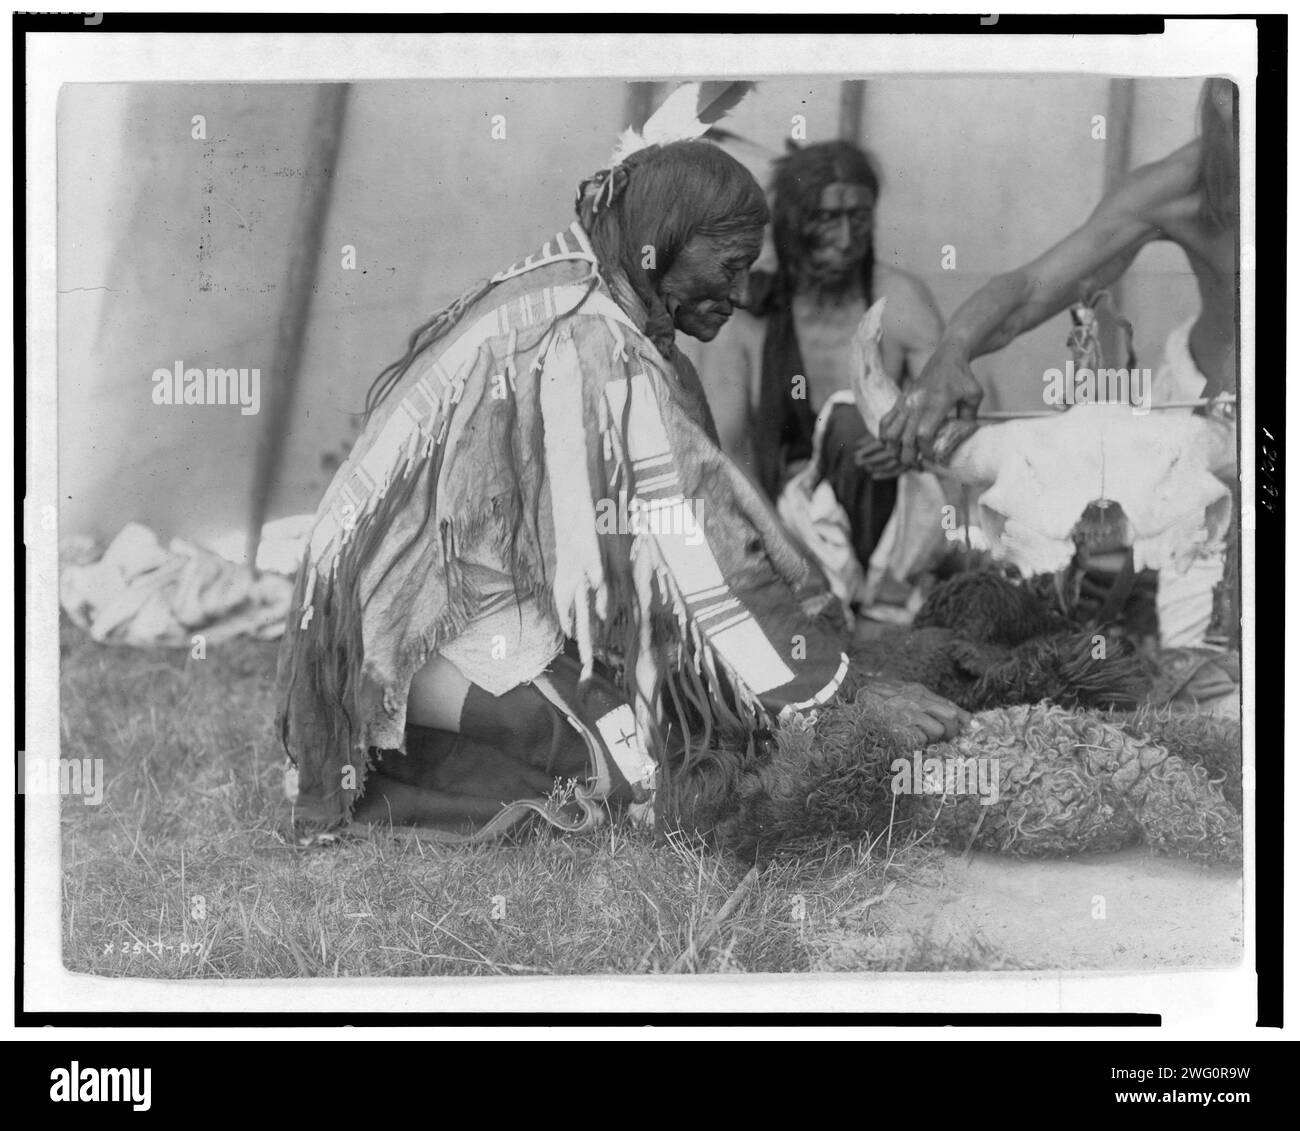 Saliva, Slow Bull (in background), Picket Pin's arm, c1907. Three Dakota men, seated or kneeling on ground, one attending to bison skull. Stock Photo